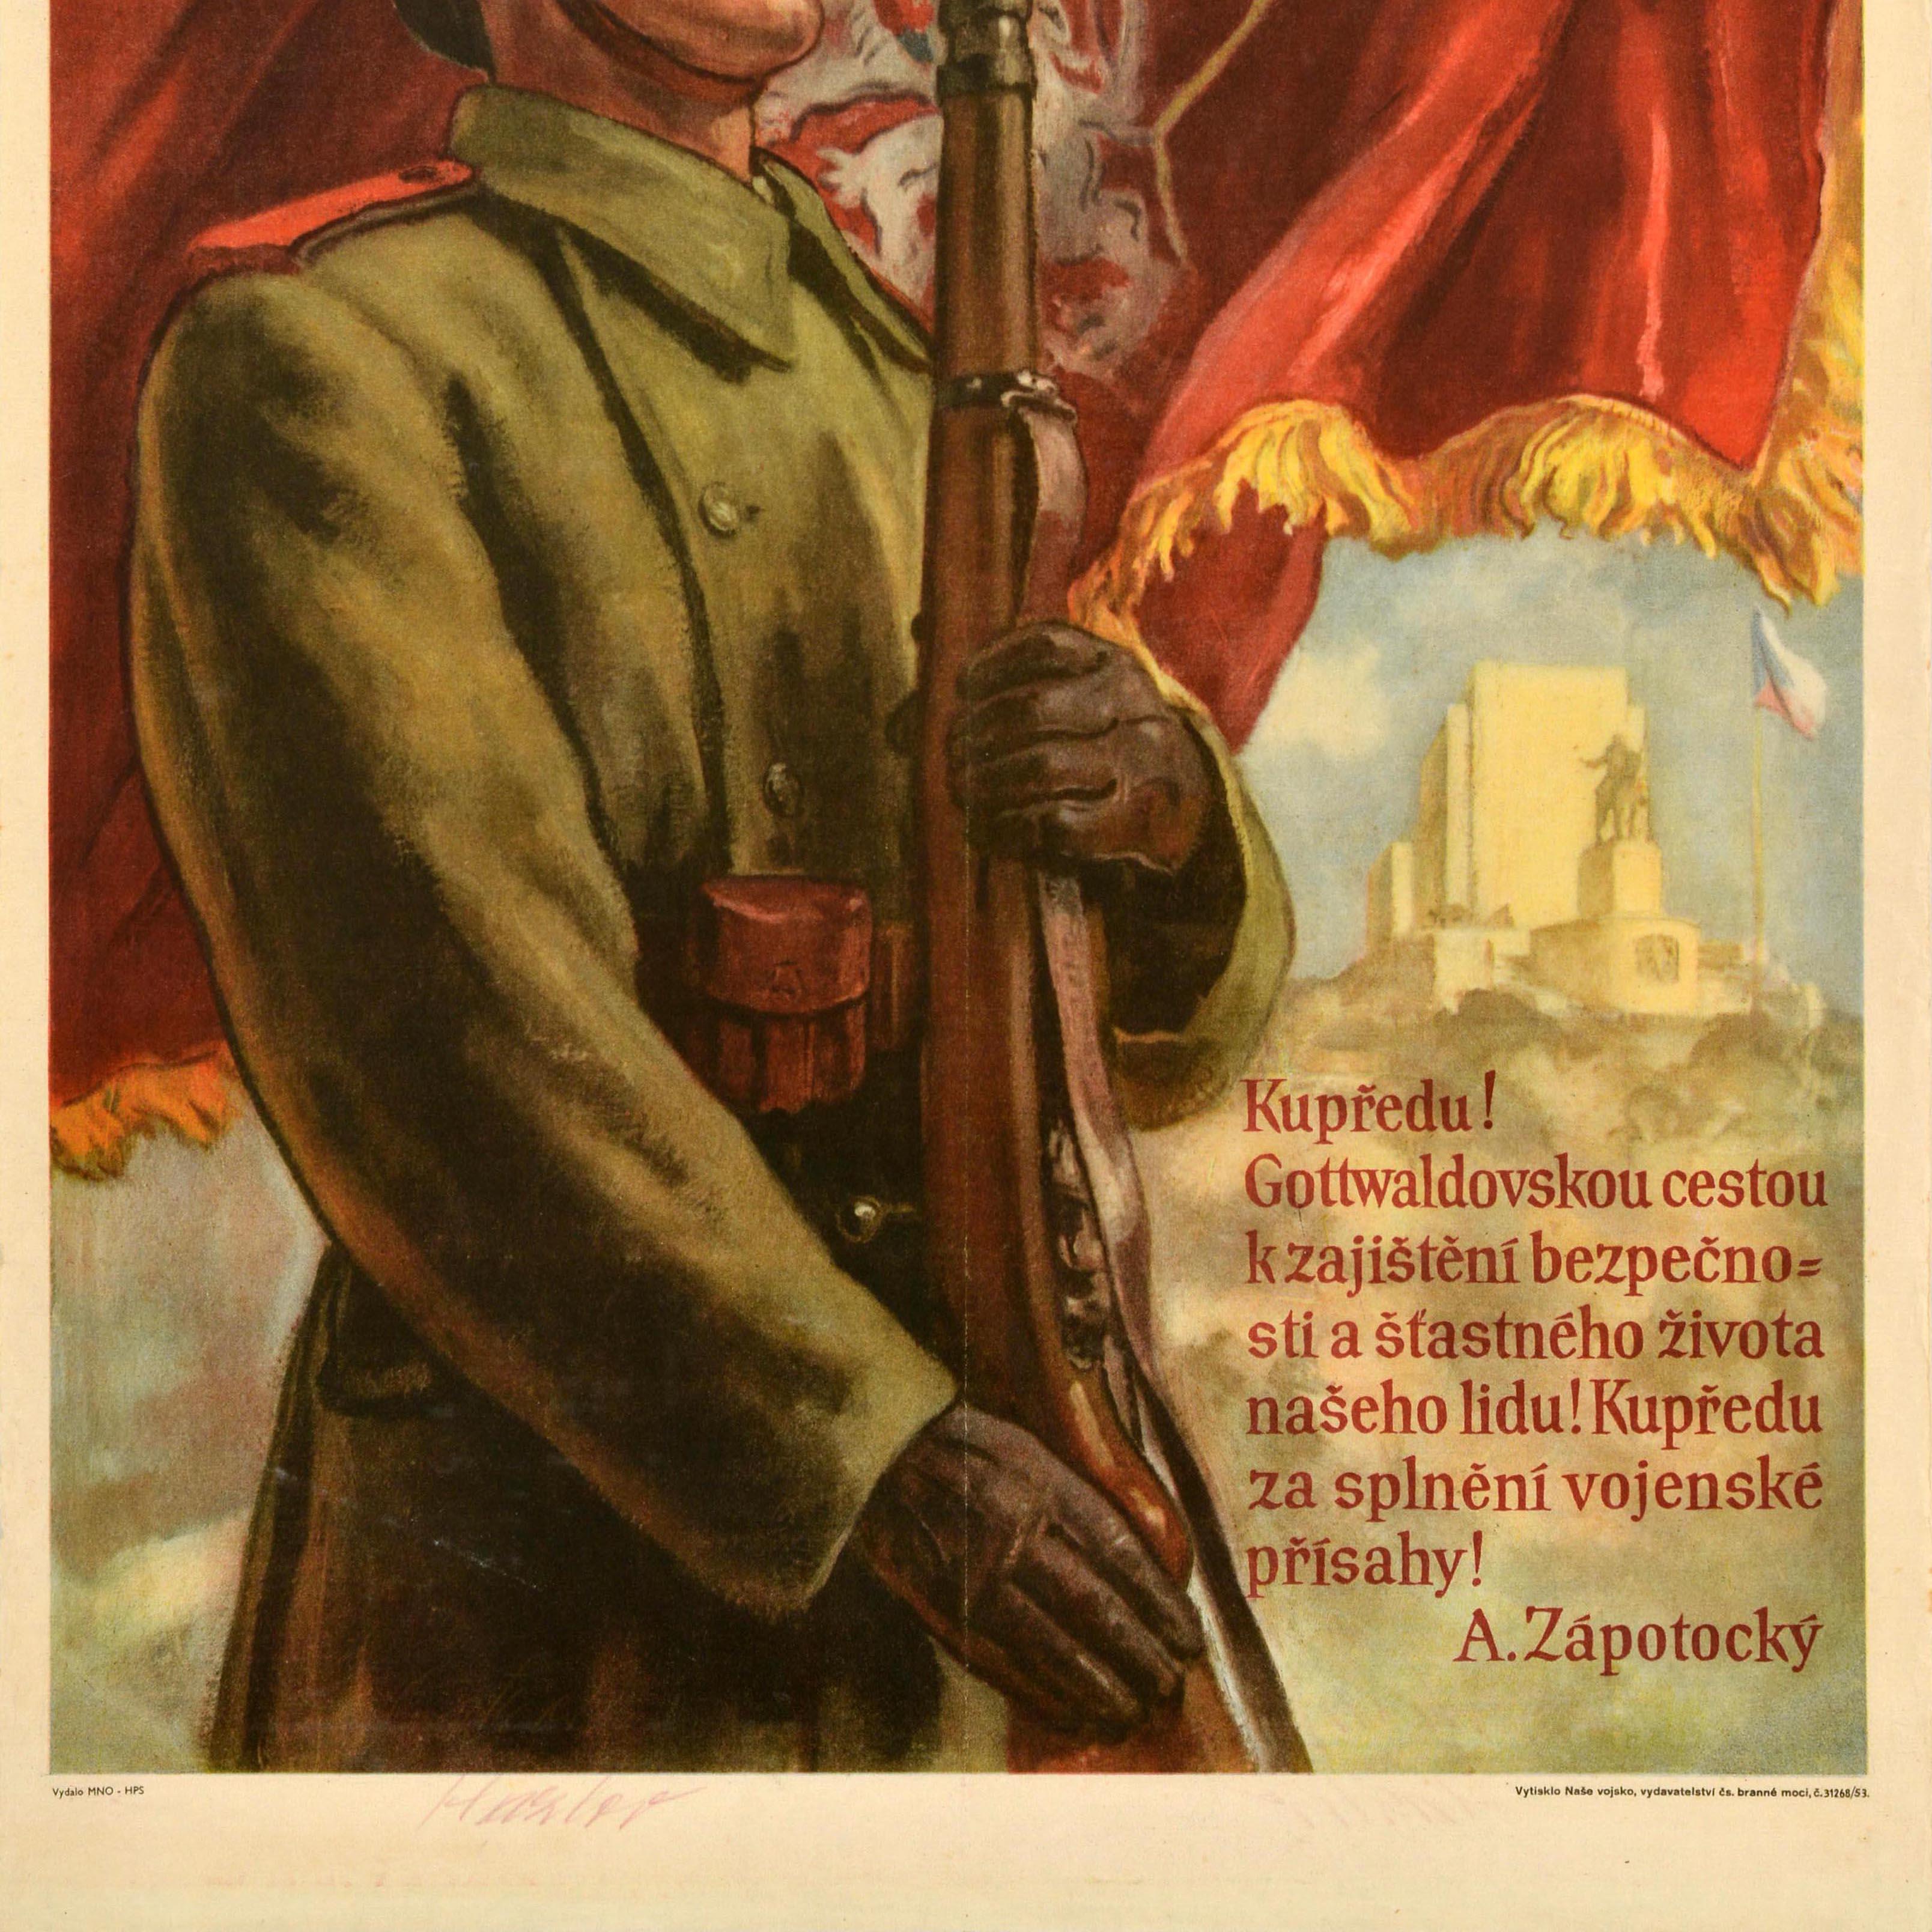 Mid-20th Century Original Vintage Czechoslovak Propaganda Poster For Motherland For Socialism For Sale